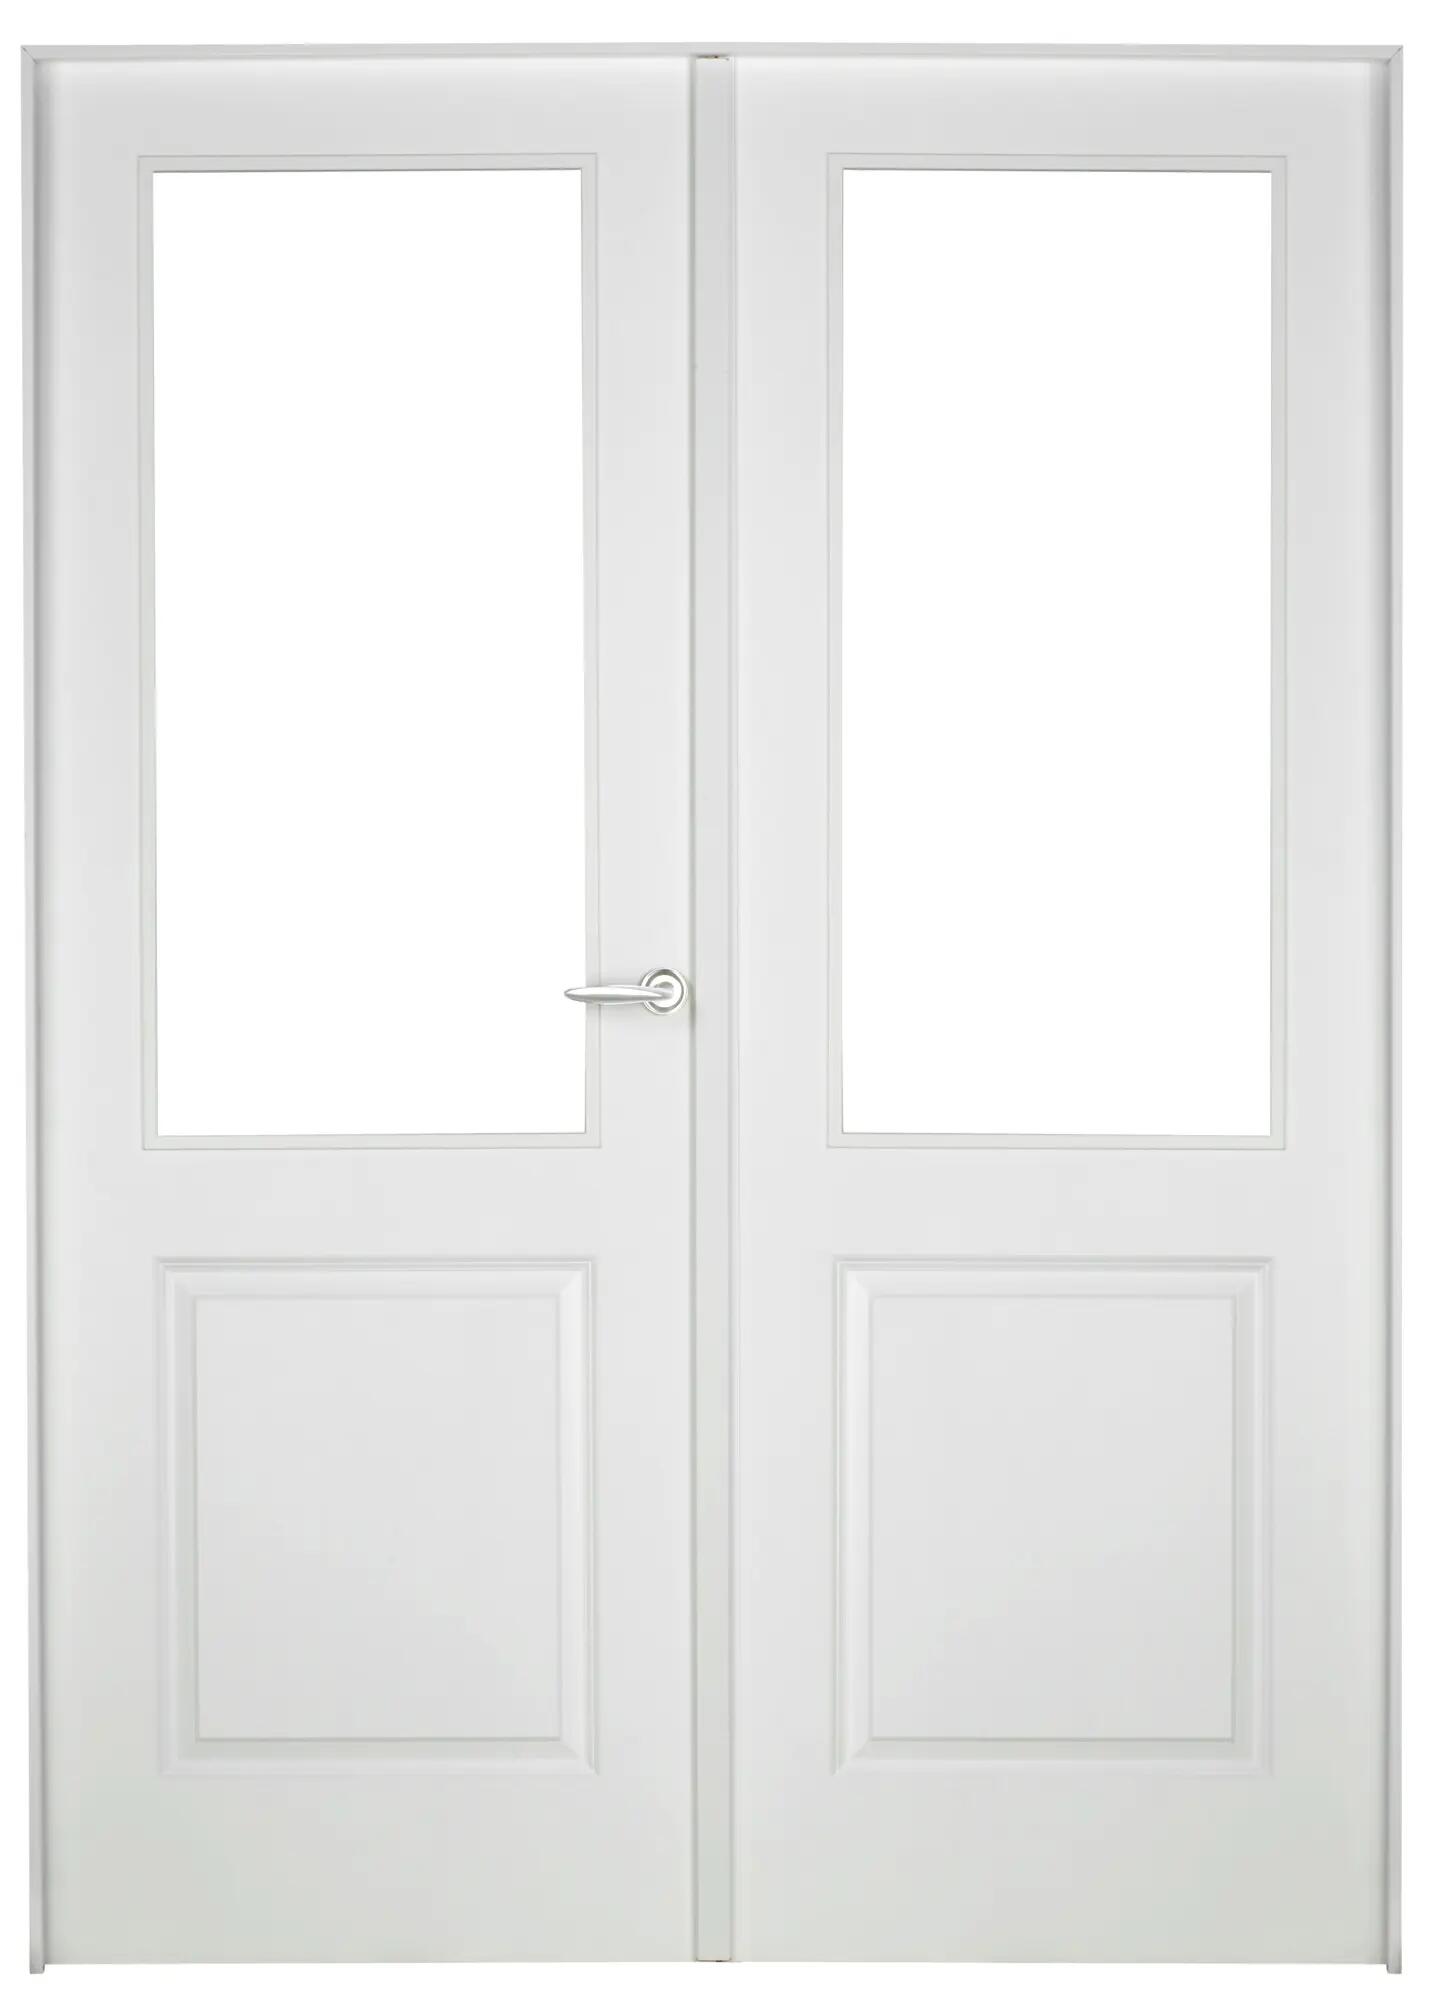 Puerta bonn blanco apertura izquierda con cristal 125cm